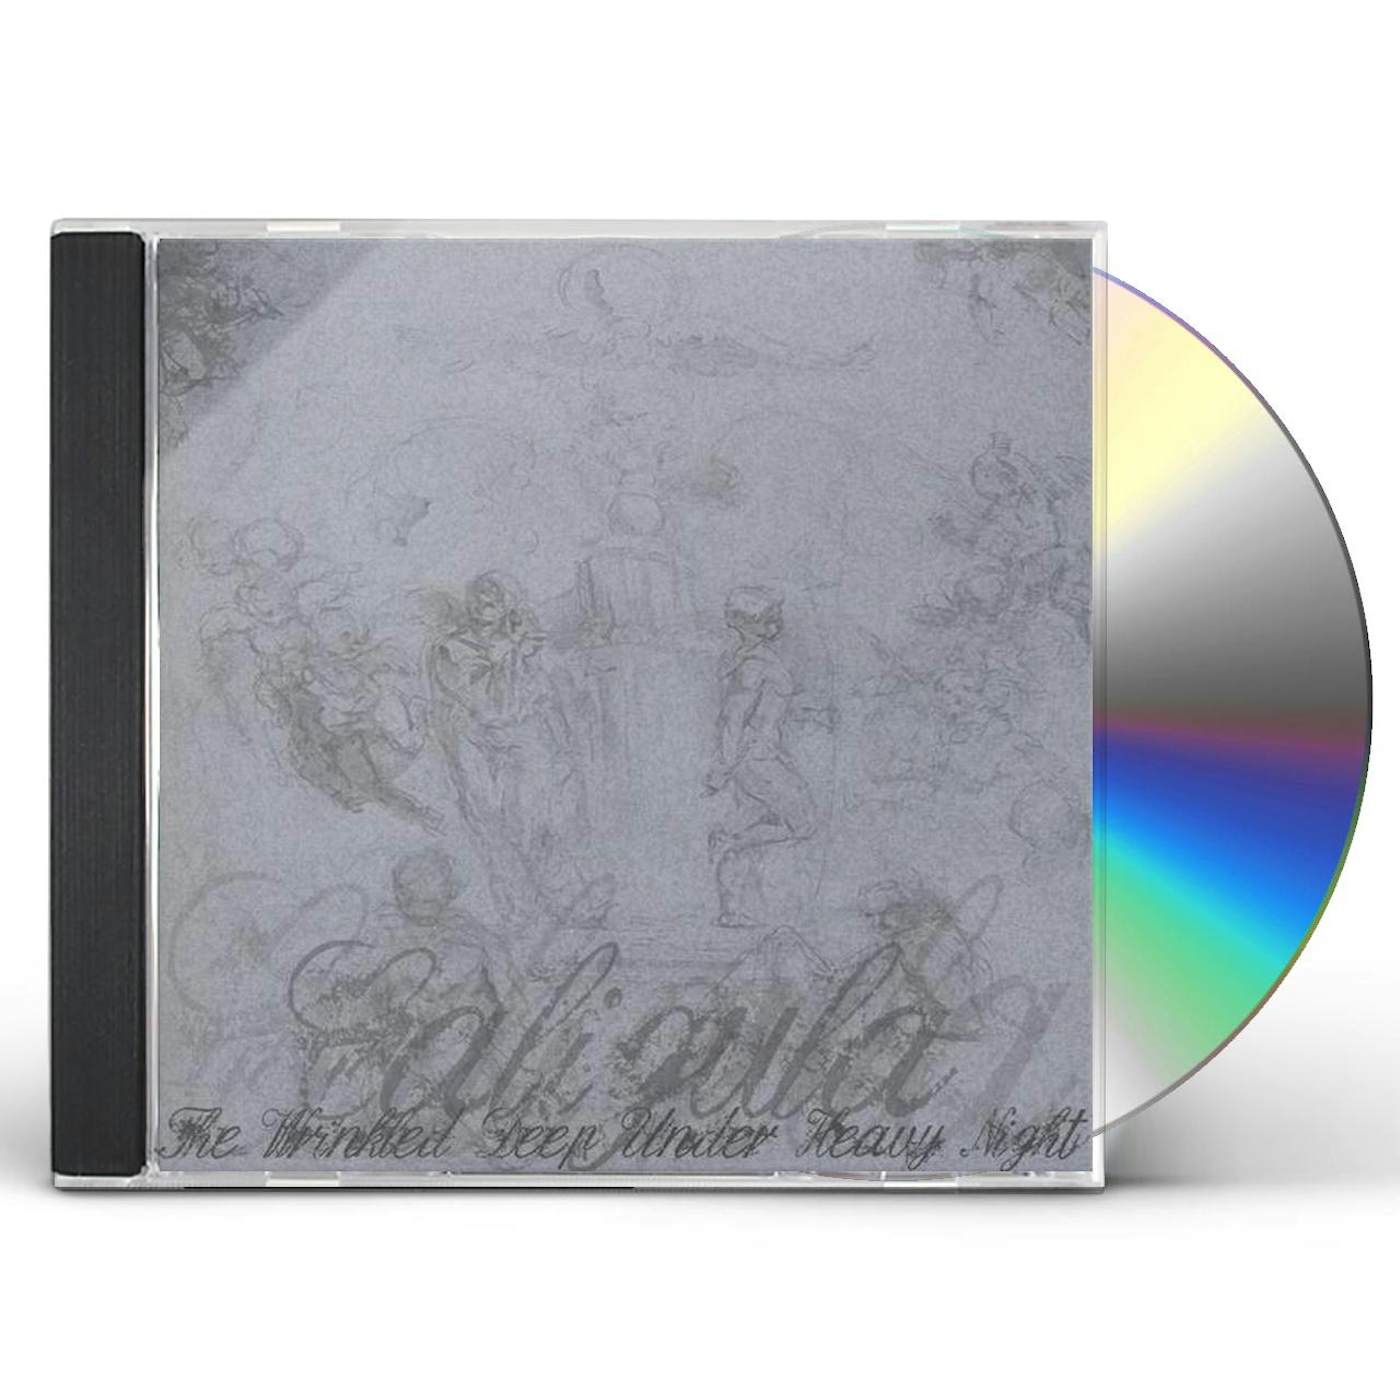 Caligula WRINKLED DEEP UNDER HEAVY NIGHT CD